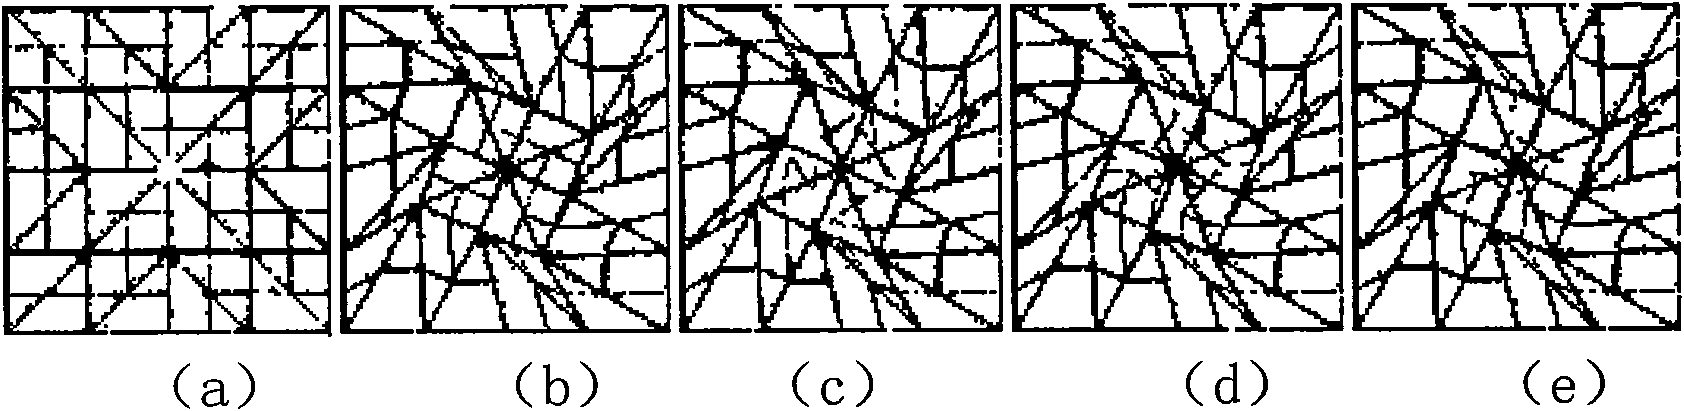 Deformation method based on control meshes